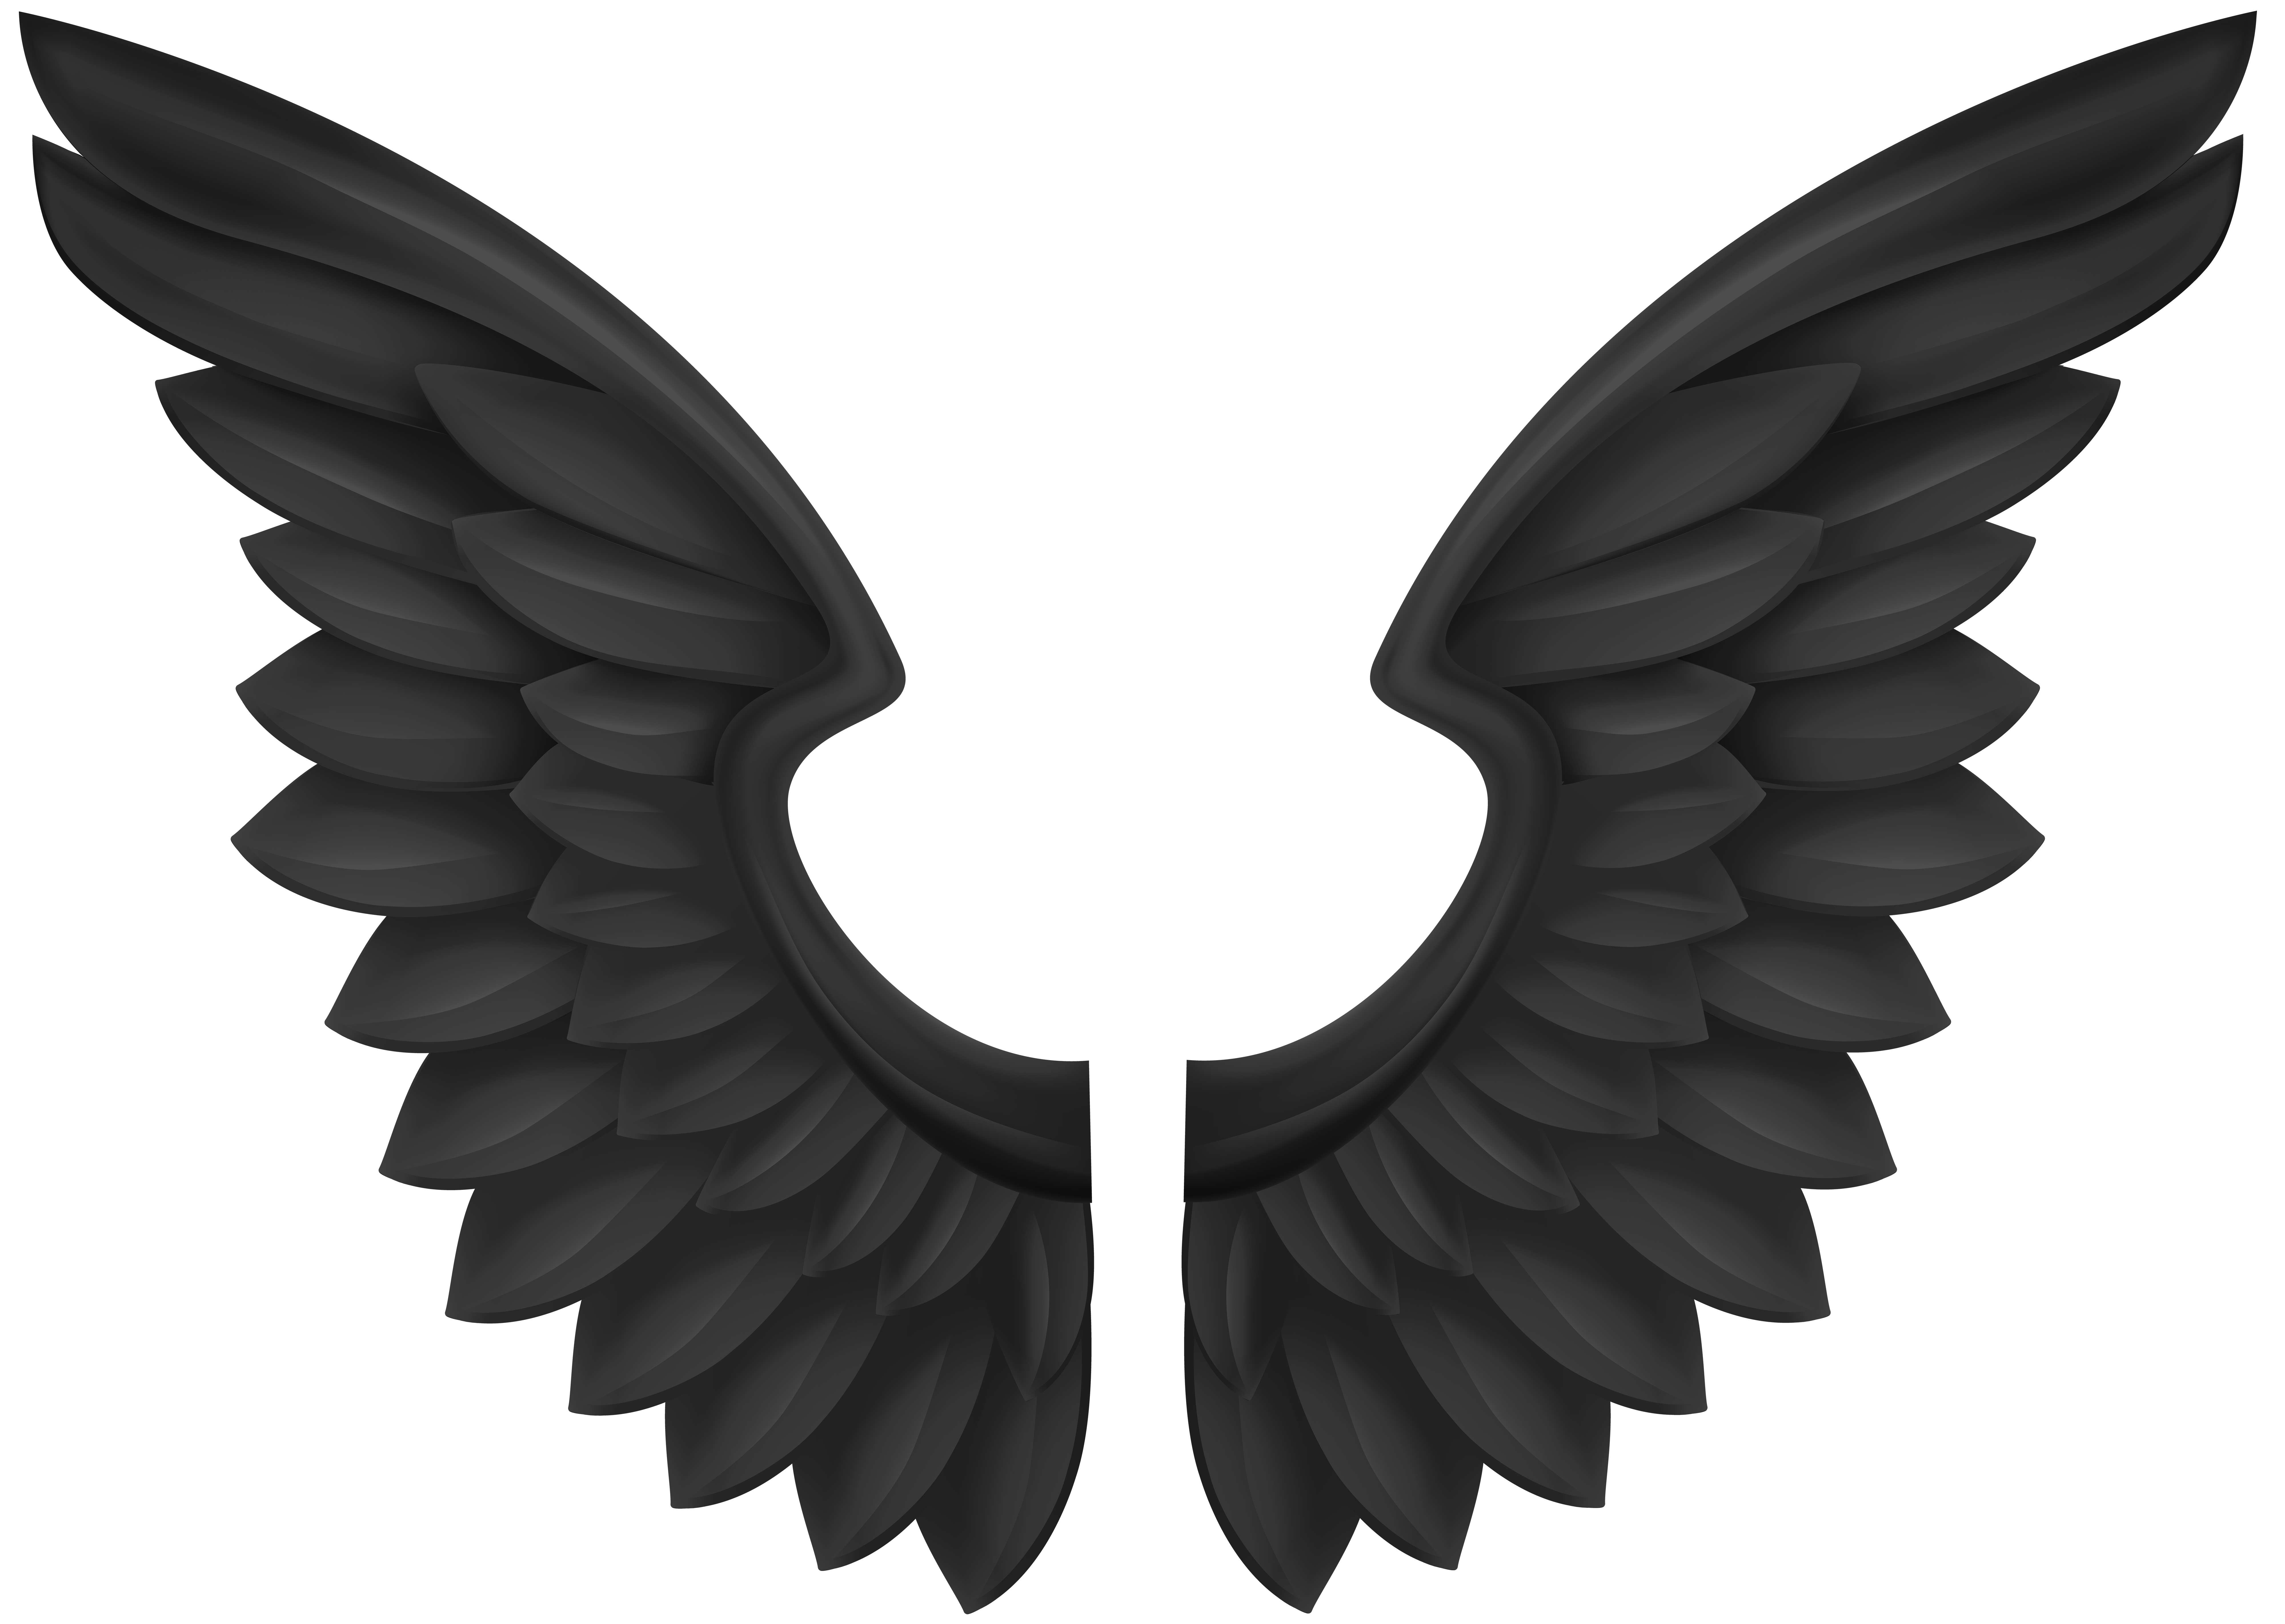 Black Wings Transparent PNG Image